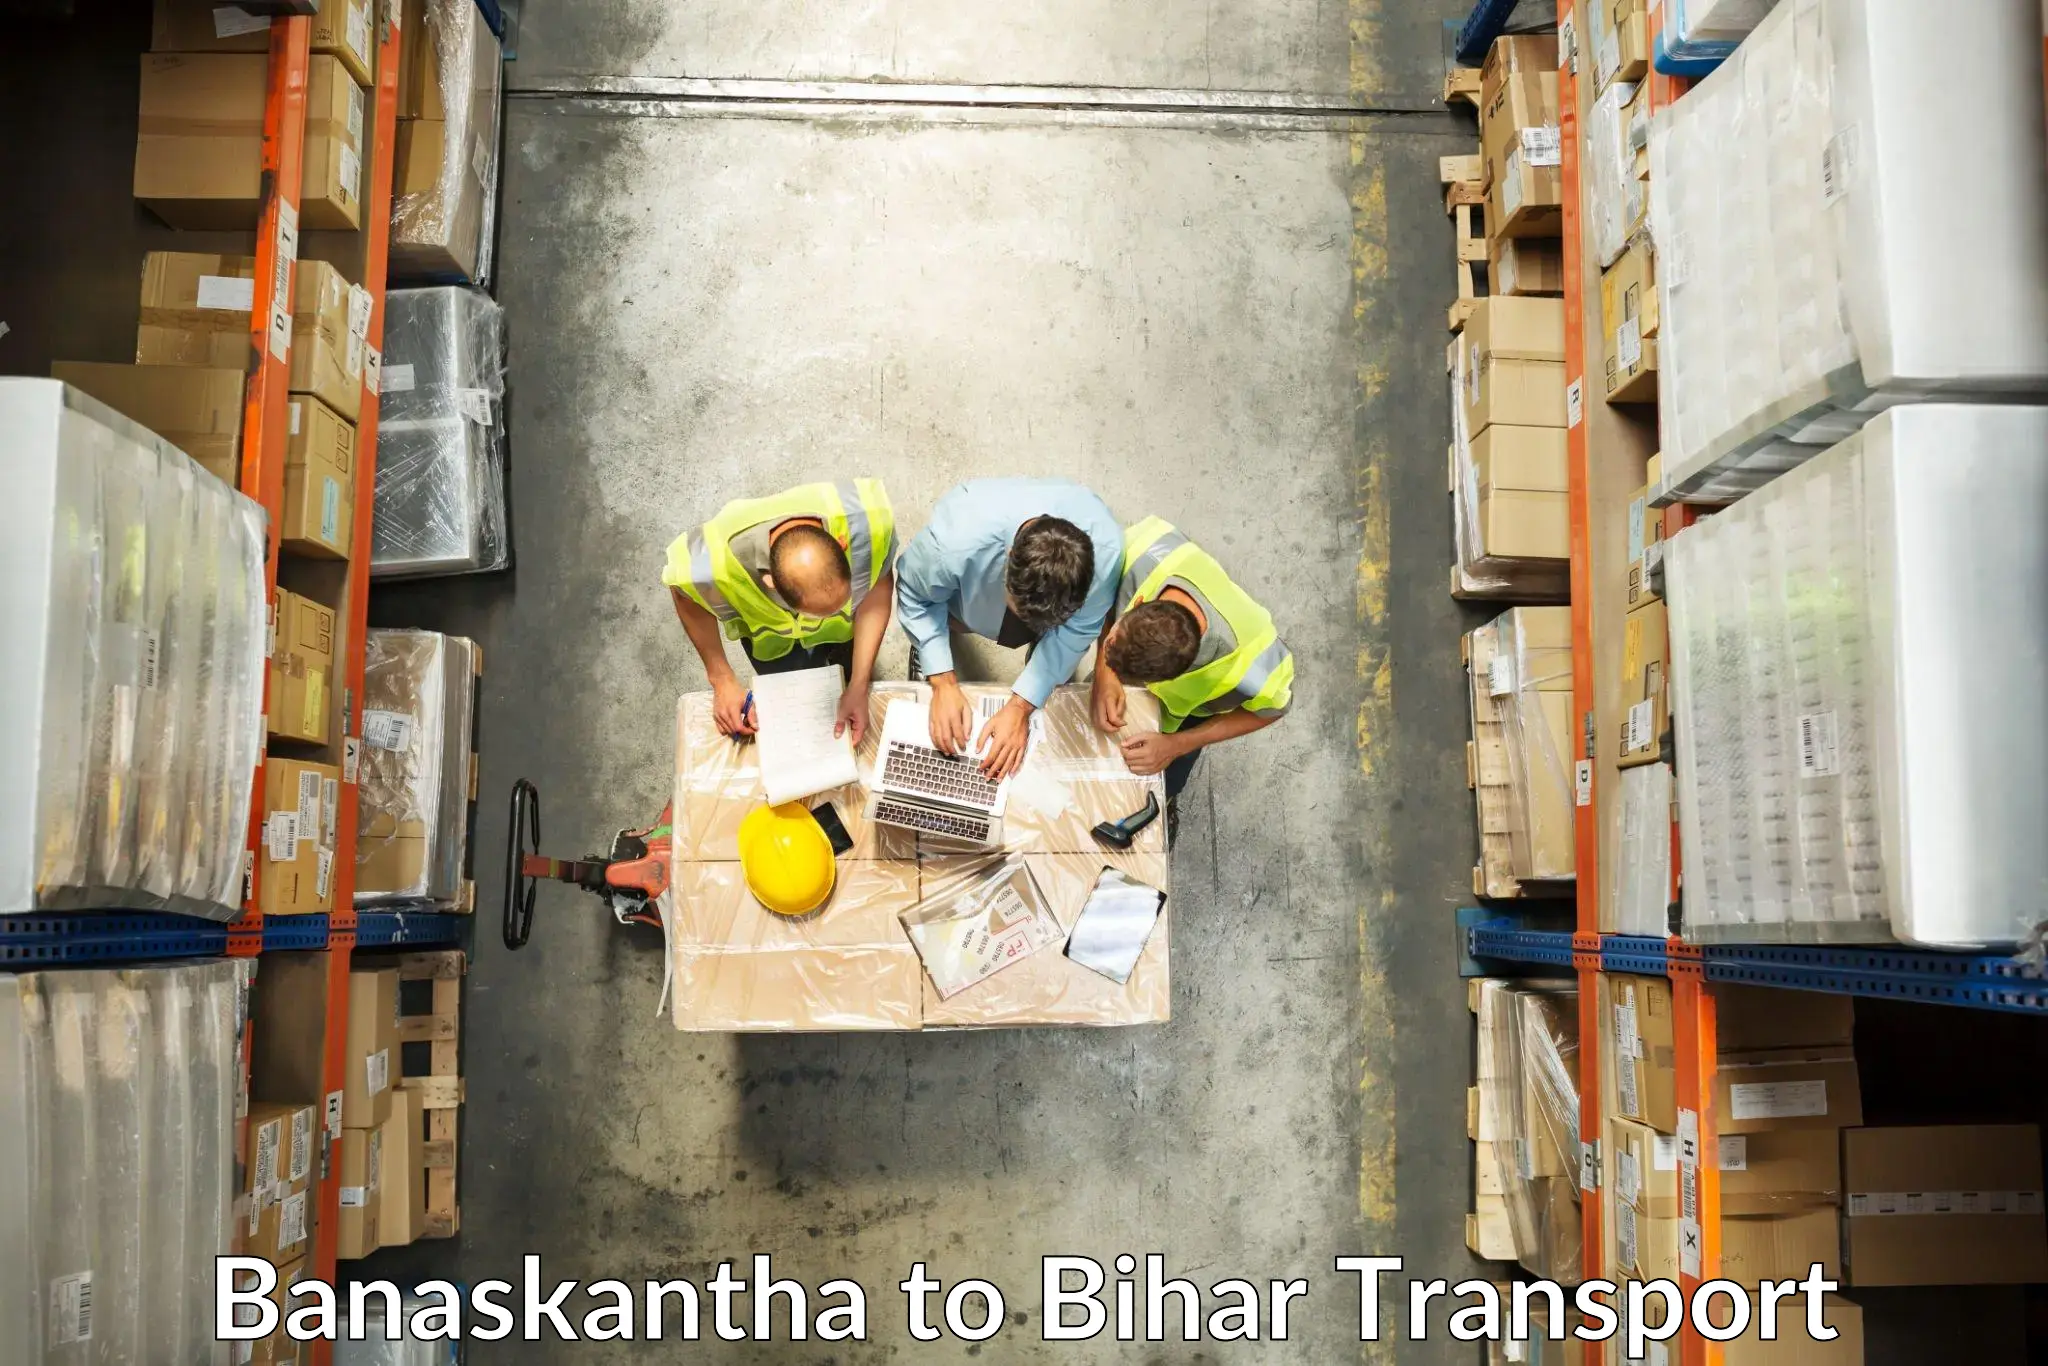 Shipping partner Banaskantha to Dhaka